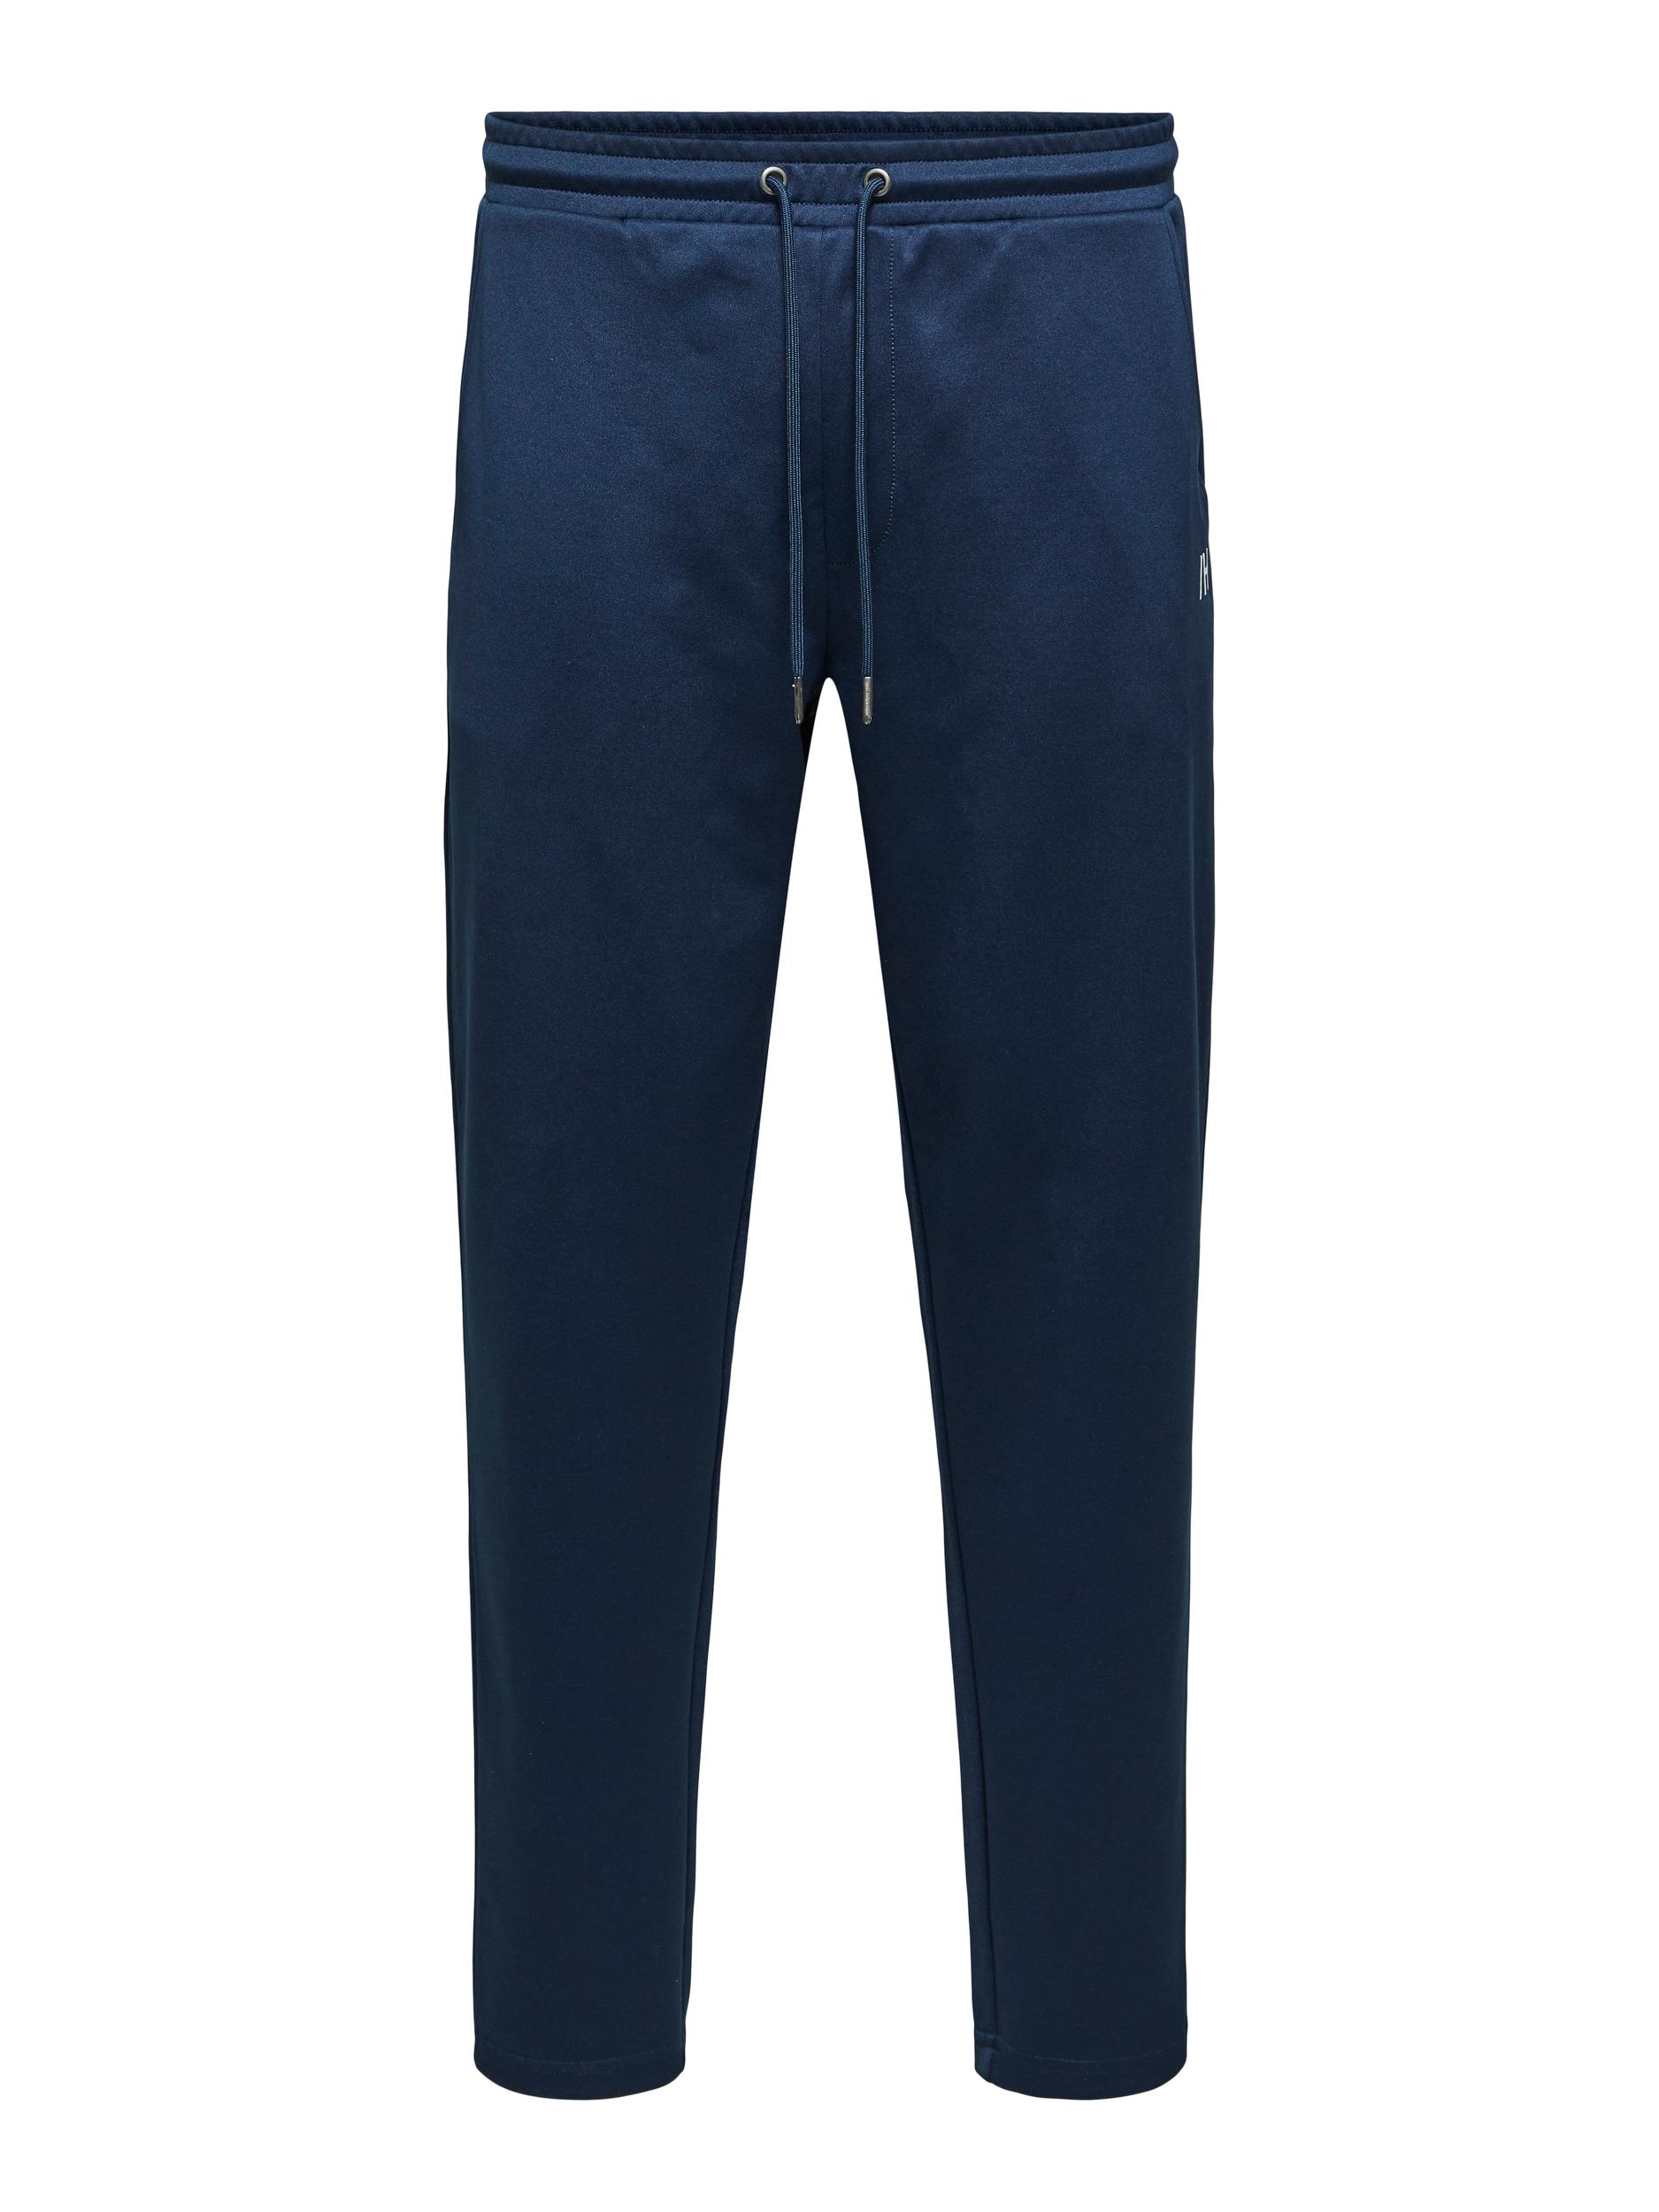 Selected Vale Sweatpants, Navy Blazer, m